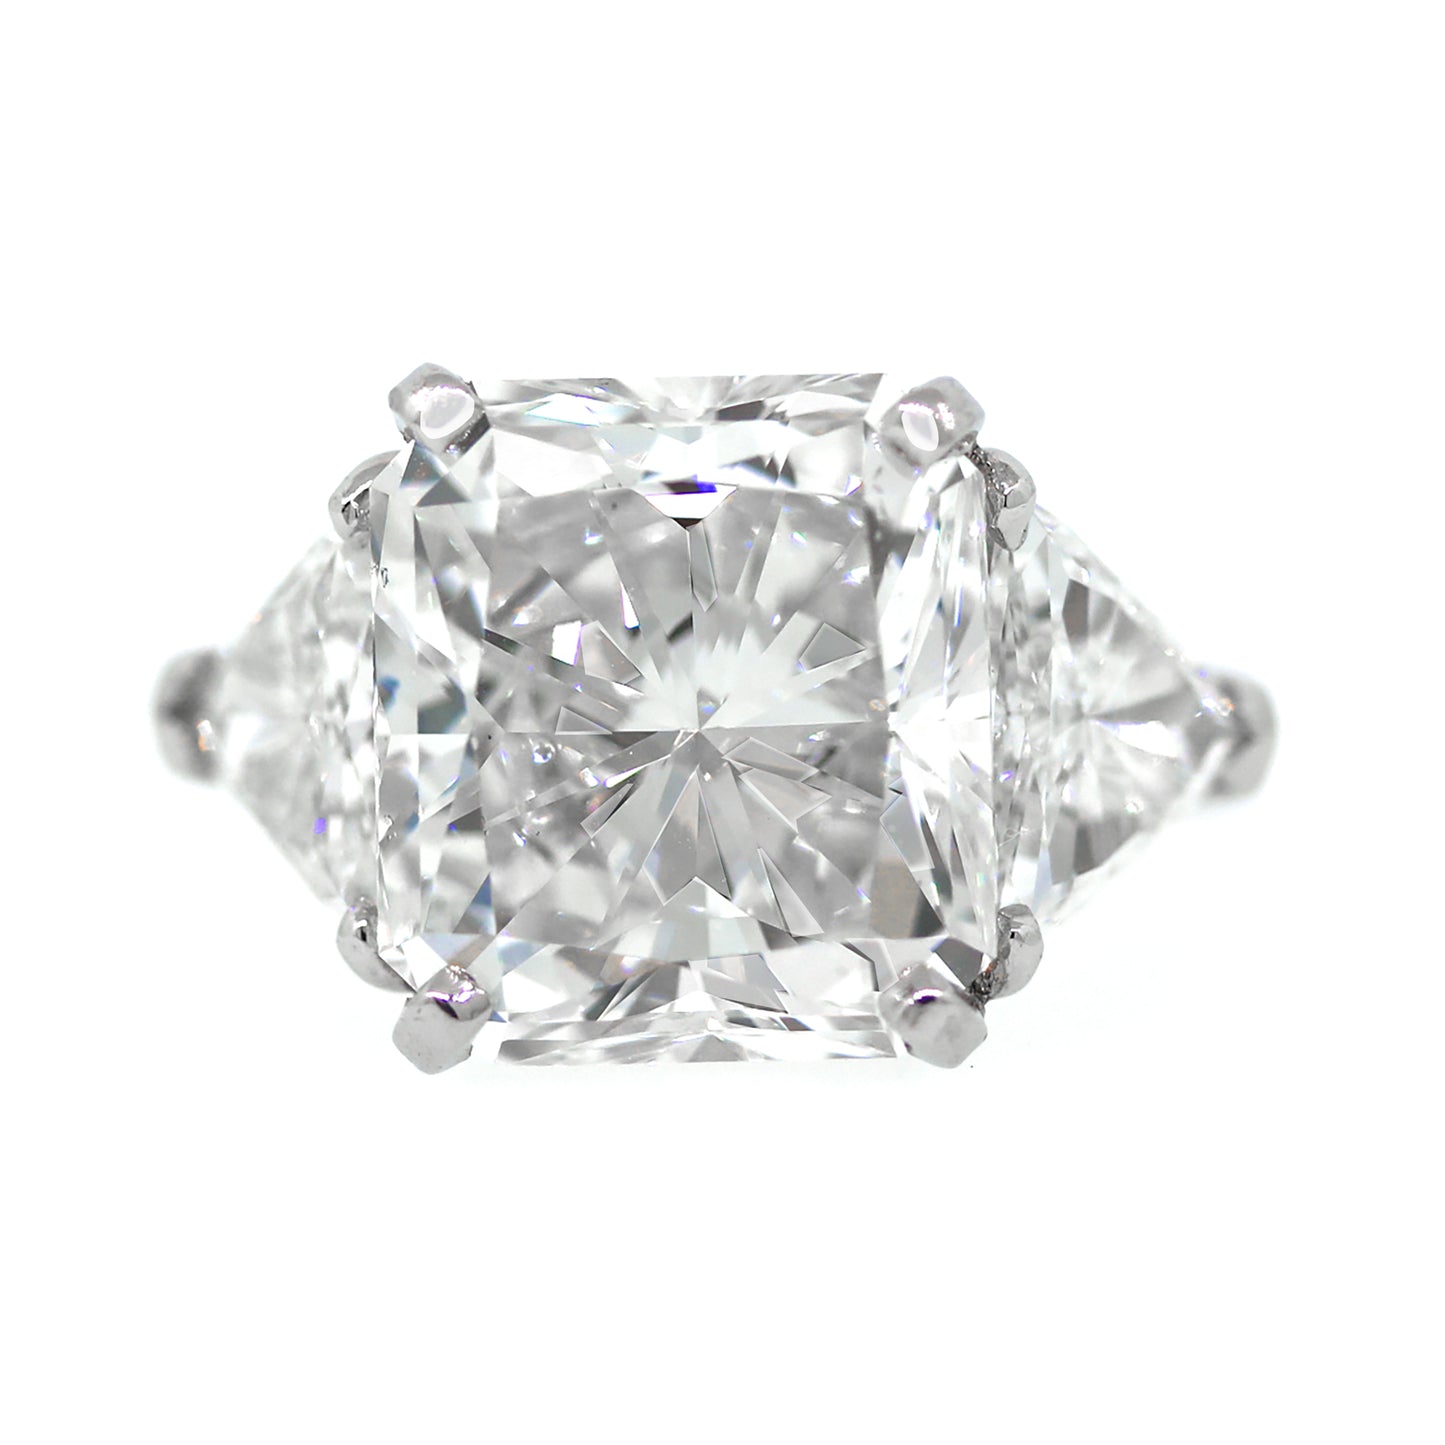 GIA Certified 9.02 carat Radiant Cut Diamond Engagement Ring in Platinum